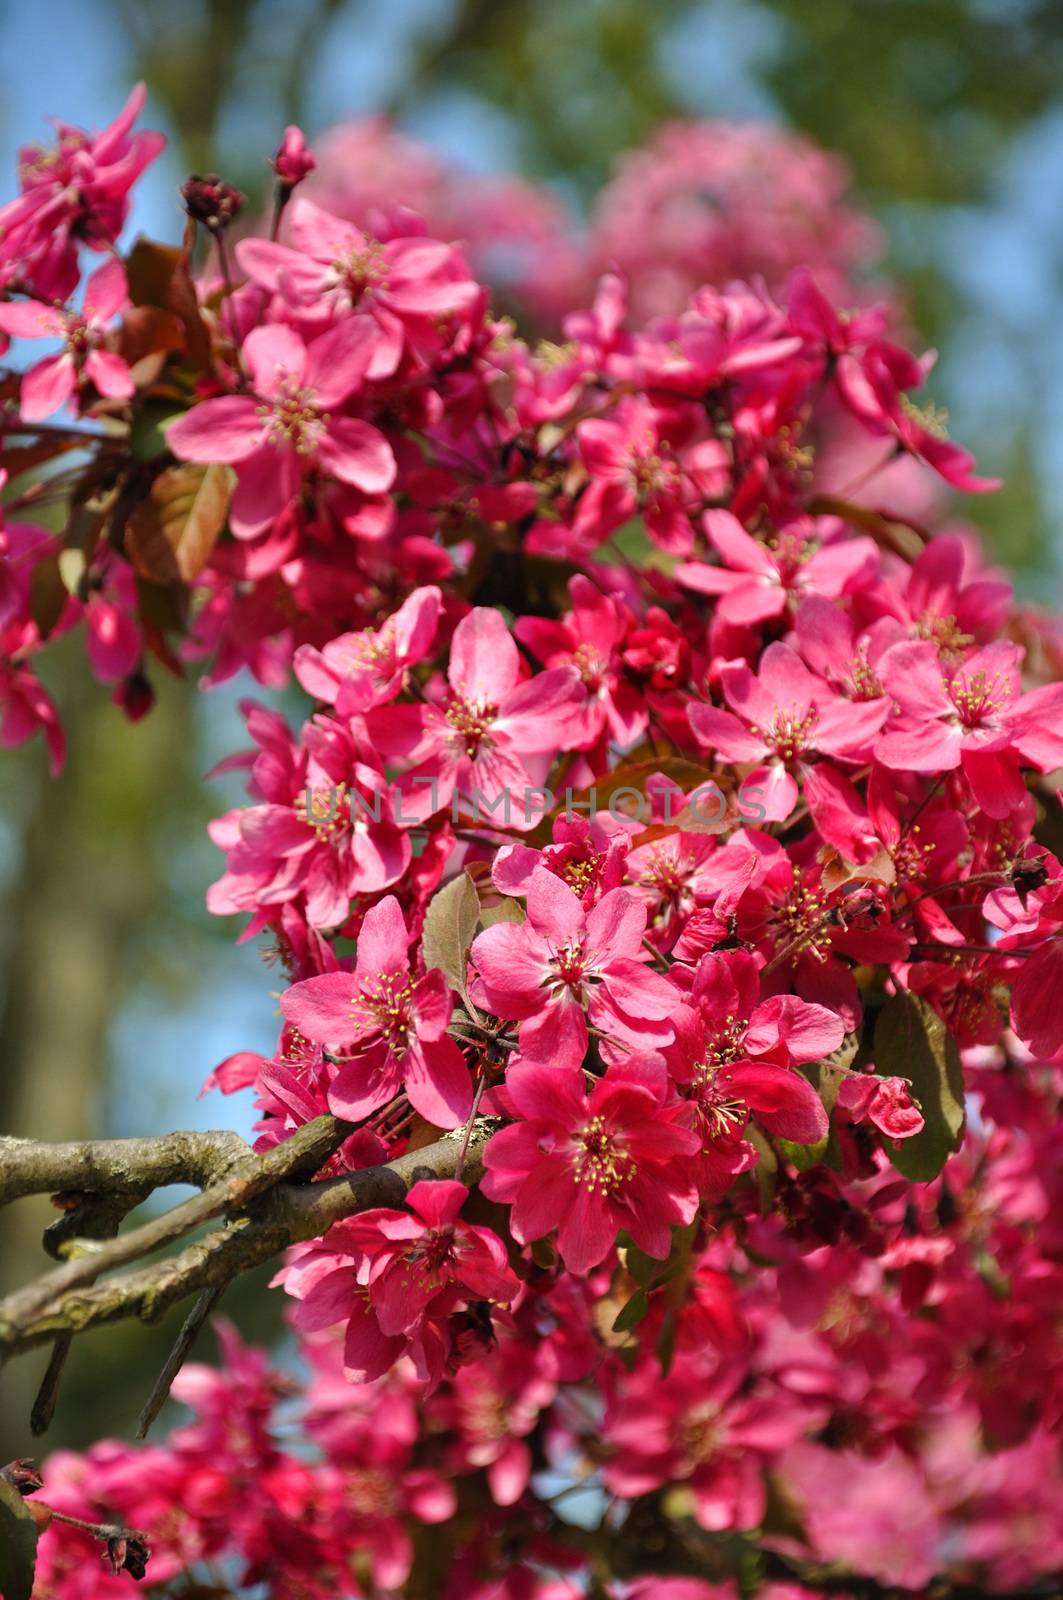 Paradise blooming pink apple flowers in spring.